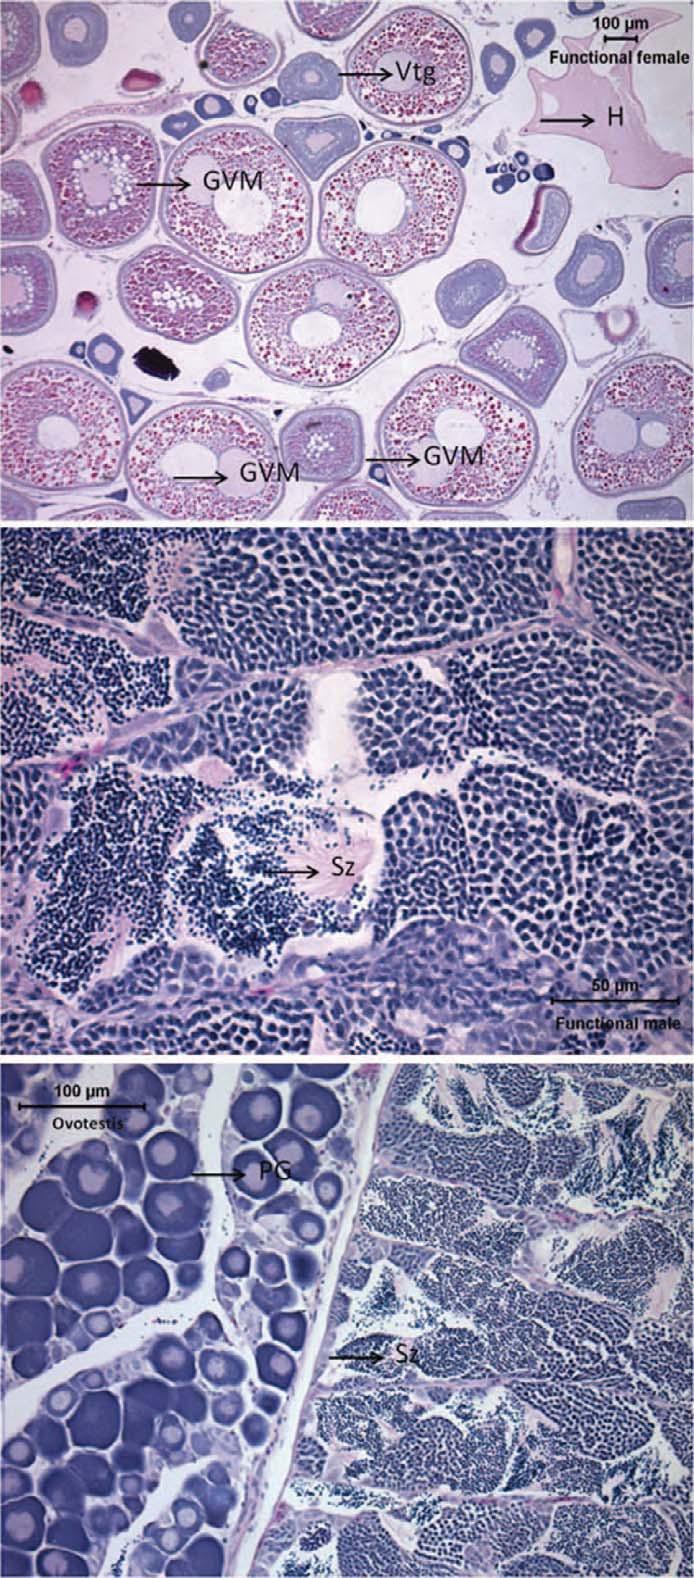 postovulatory follicle), (b) detail of functional testicular tissue (Sz = spermatozoa), and (c) functional ovotestis. FIGURE 11.